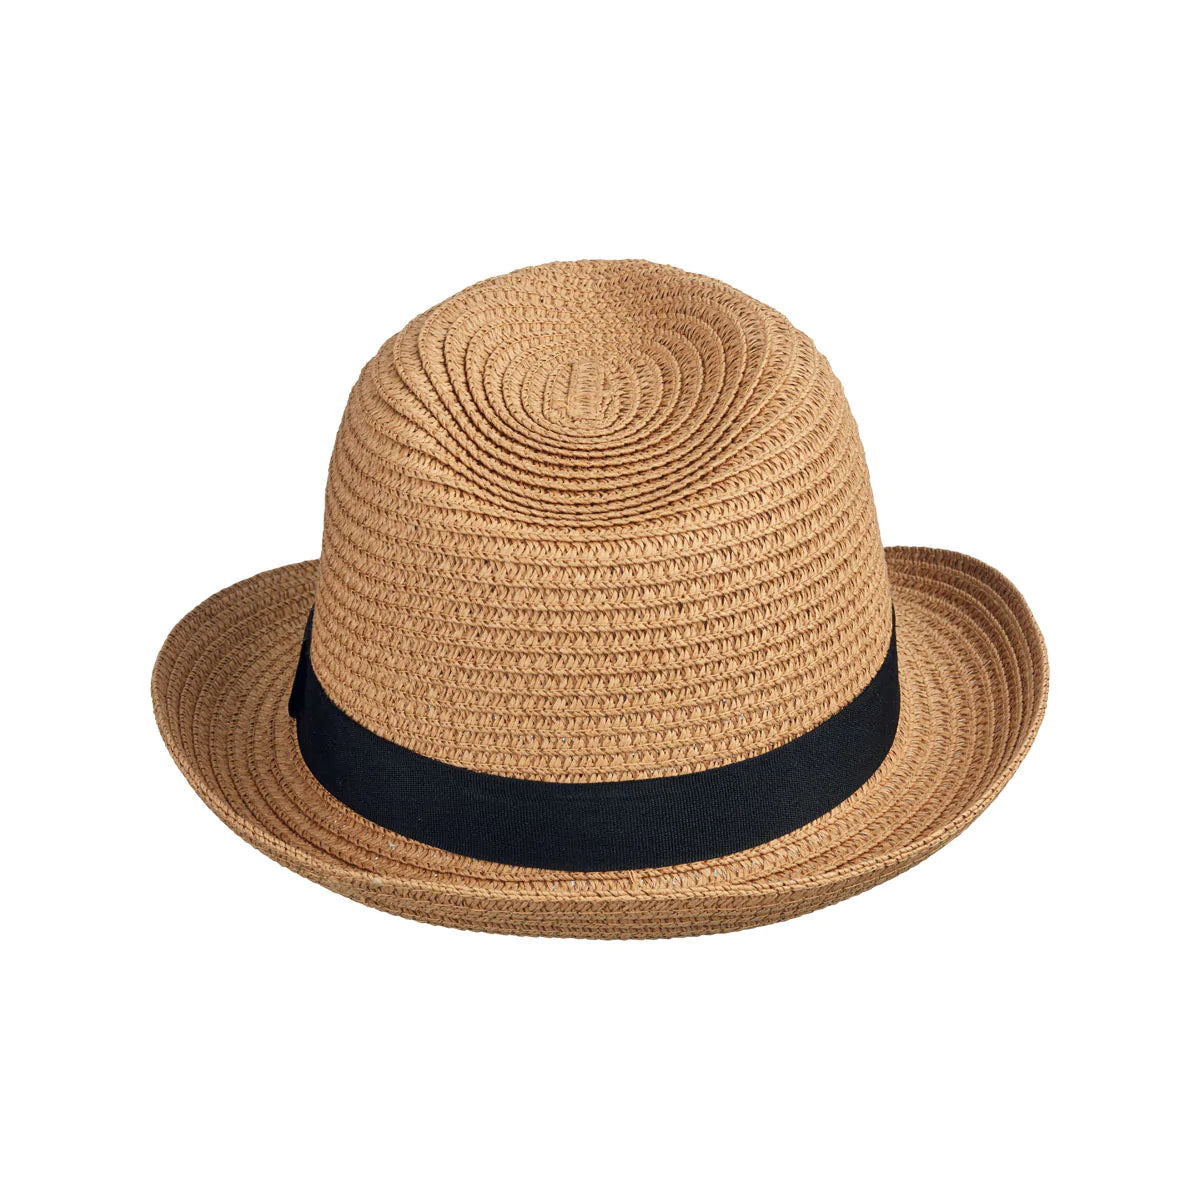 Liewood Doro fedora hat str.2-5, brown/black